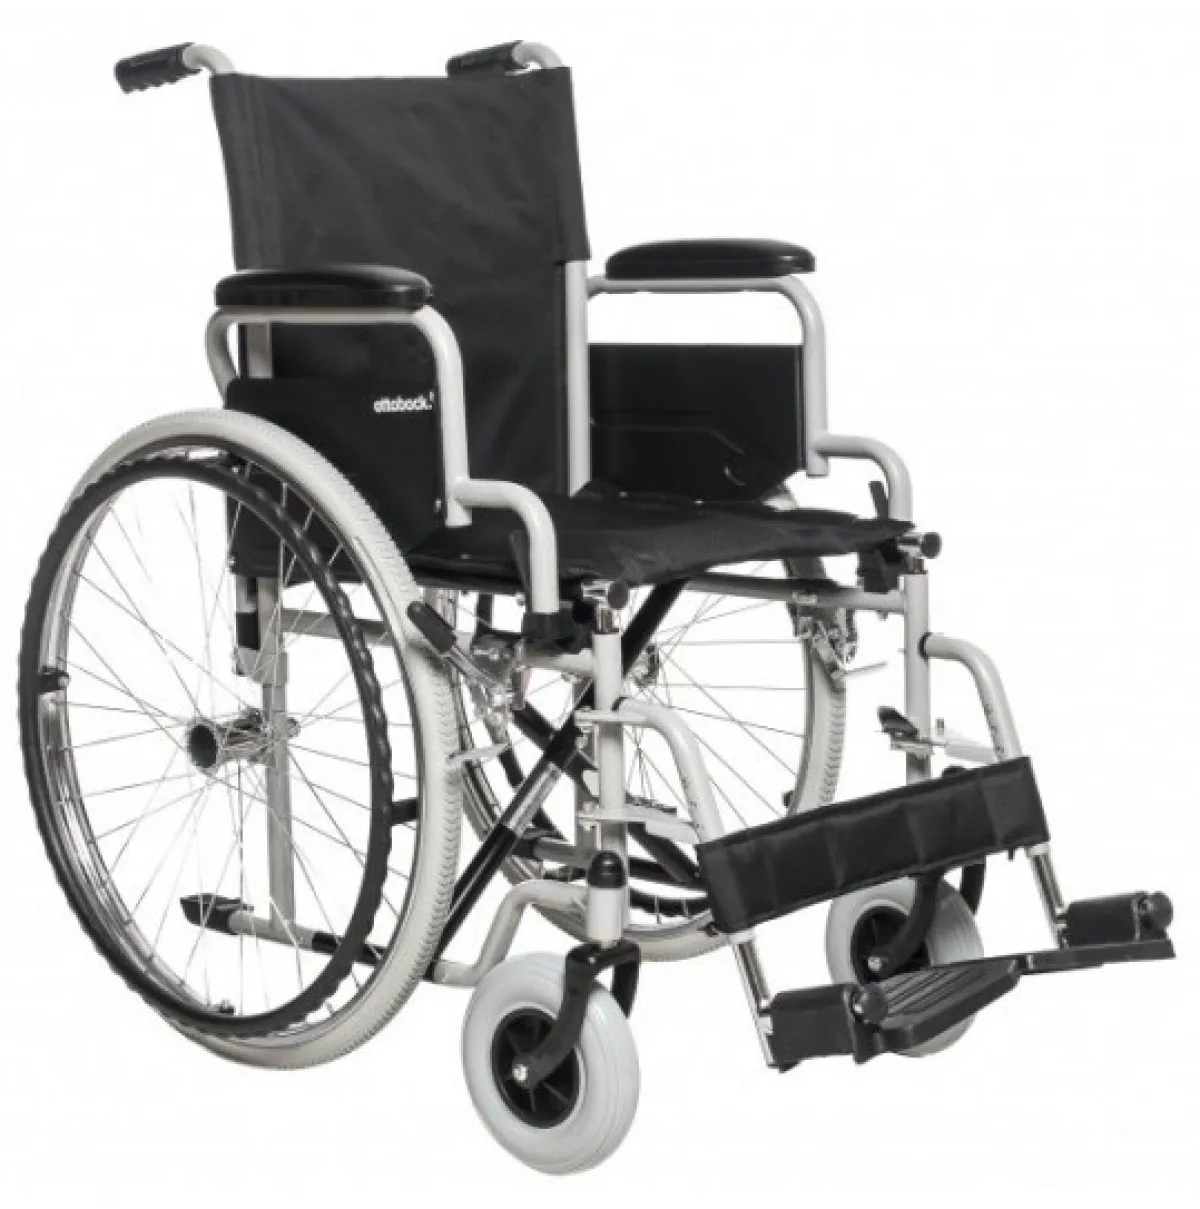 Коляска ottobock цена. Инвалидная коляска nuova Blandino. Инвалидная коляска m2000 Comfort Plus. Ottobock кресло-коляска 480f53 801245 1686. Рюкзак для инвалидной коляски Otto Bock.